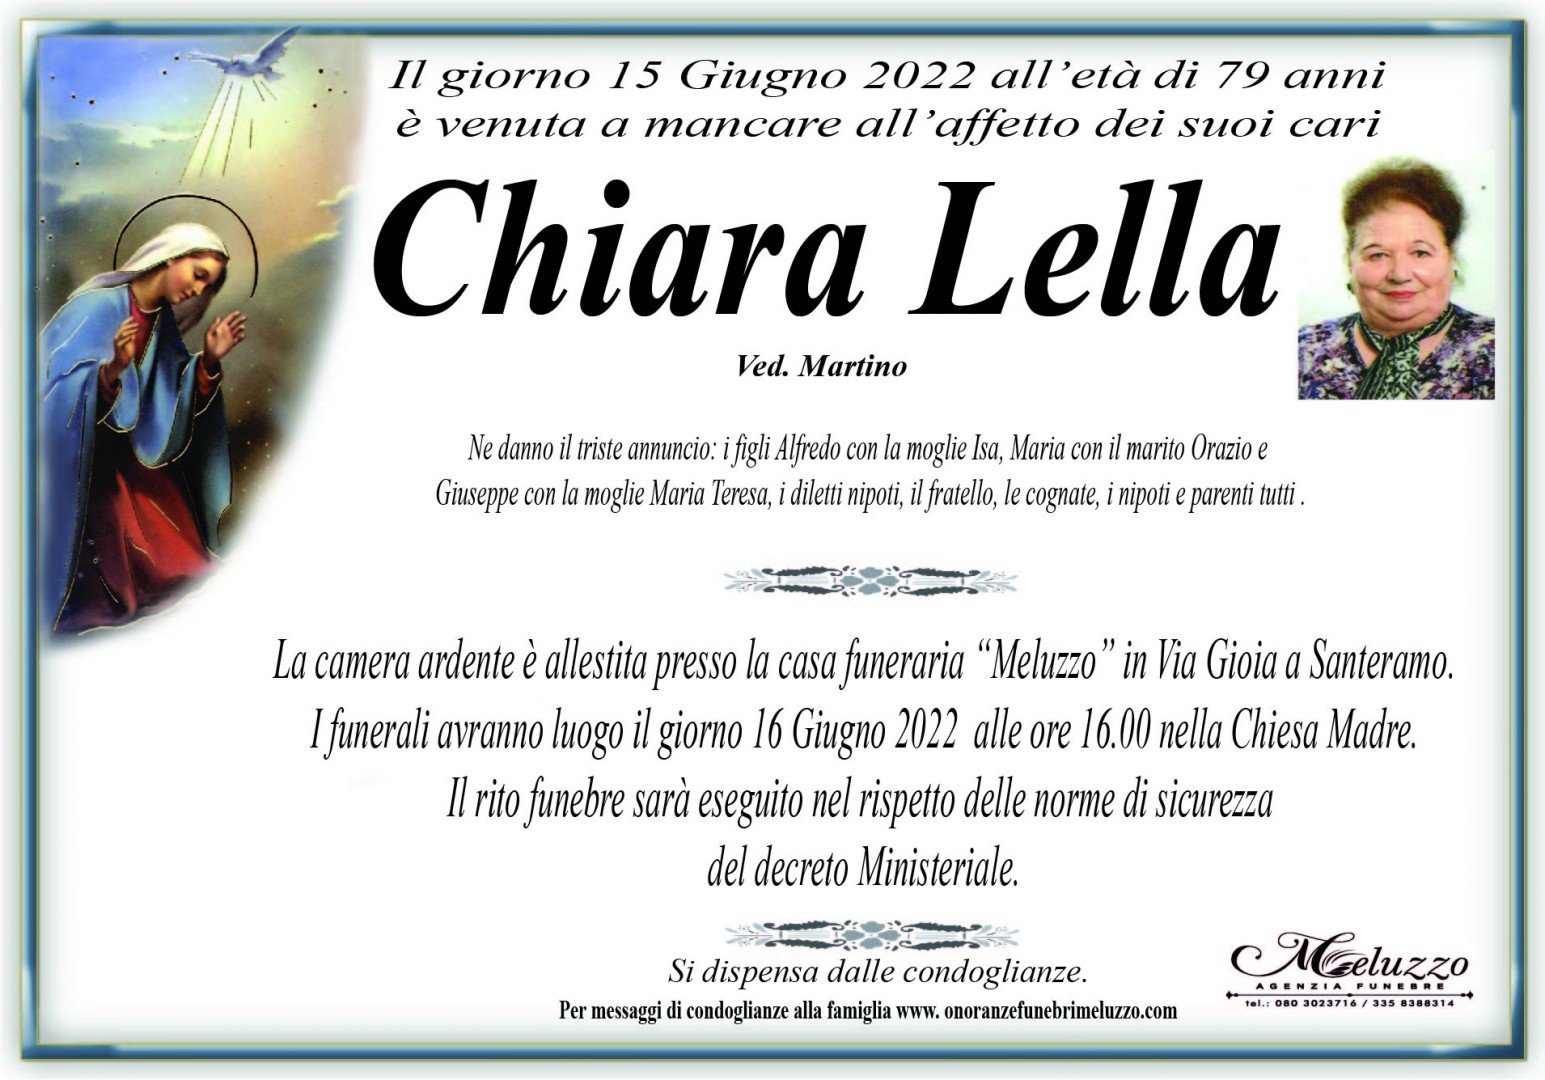 Chiara Lella